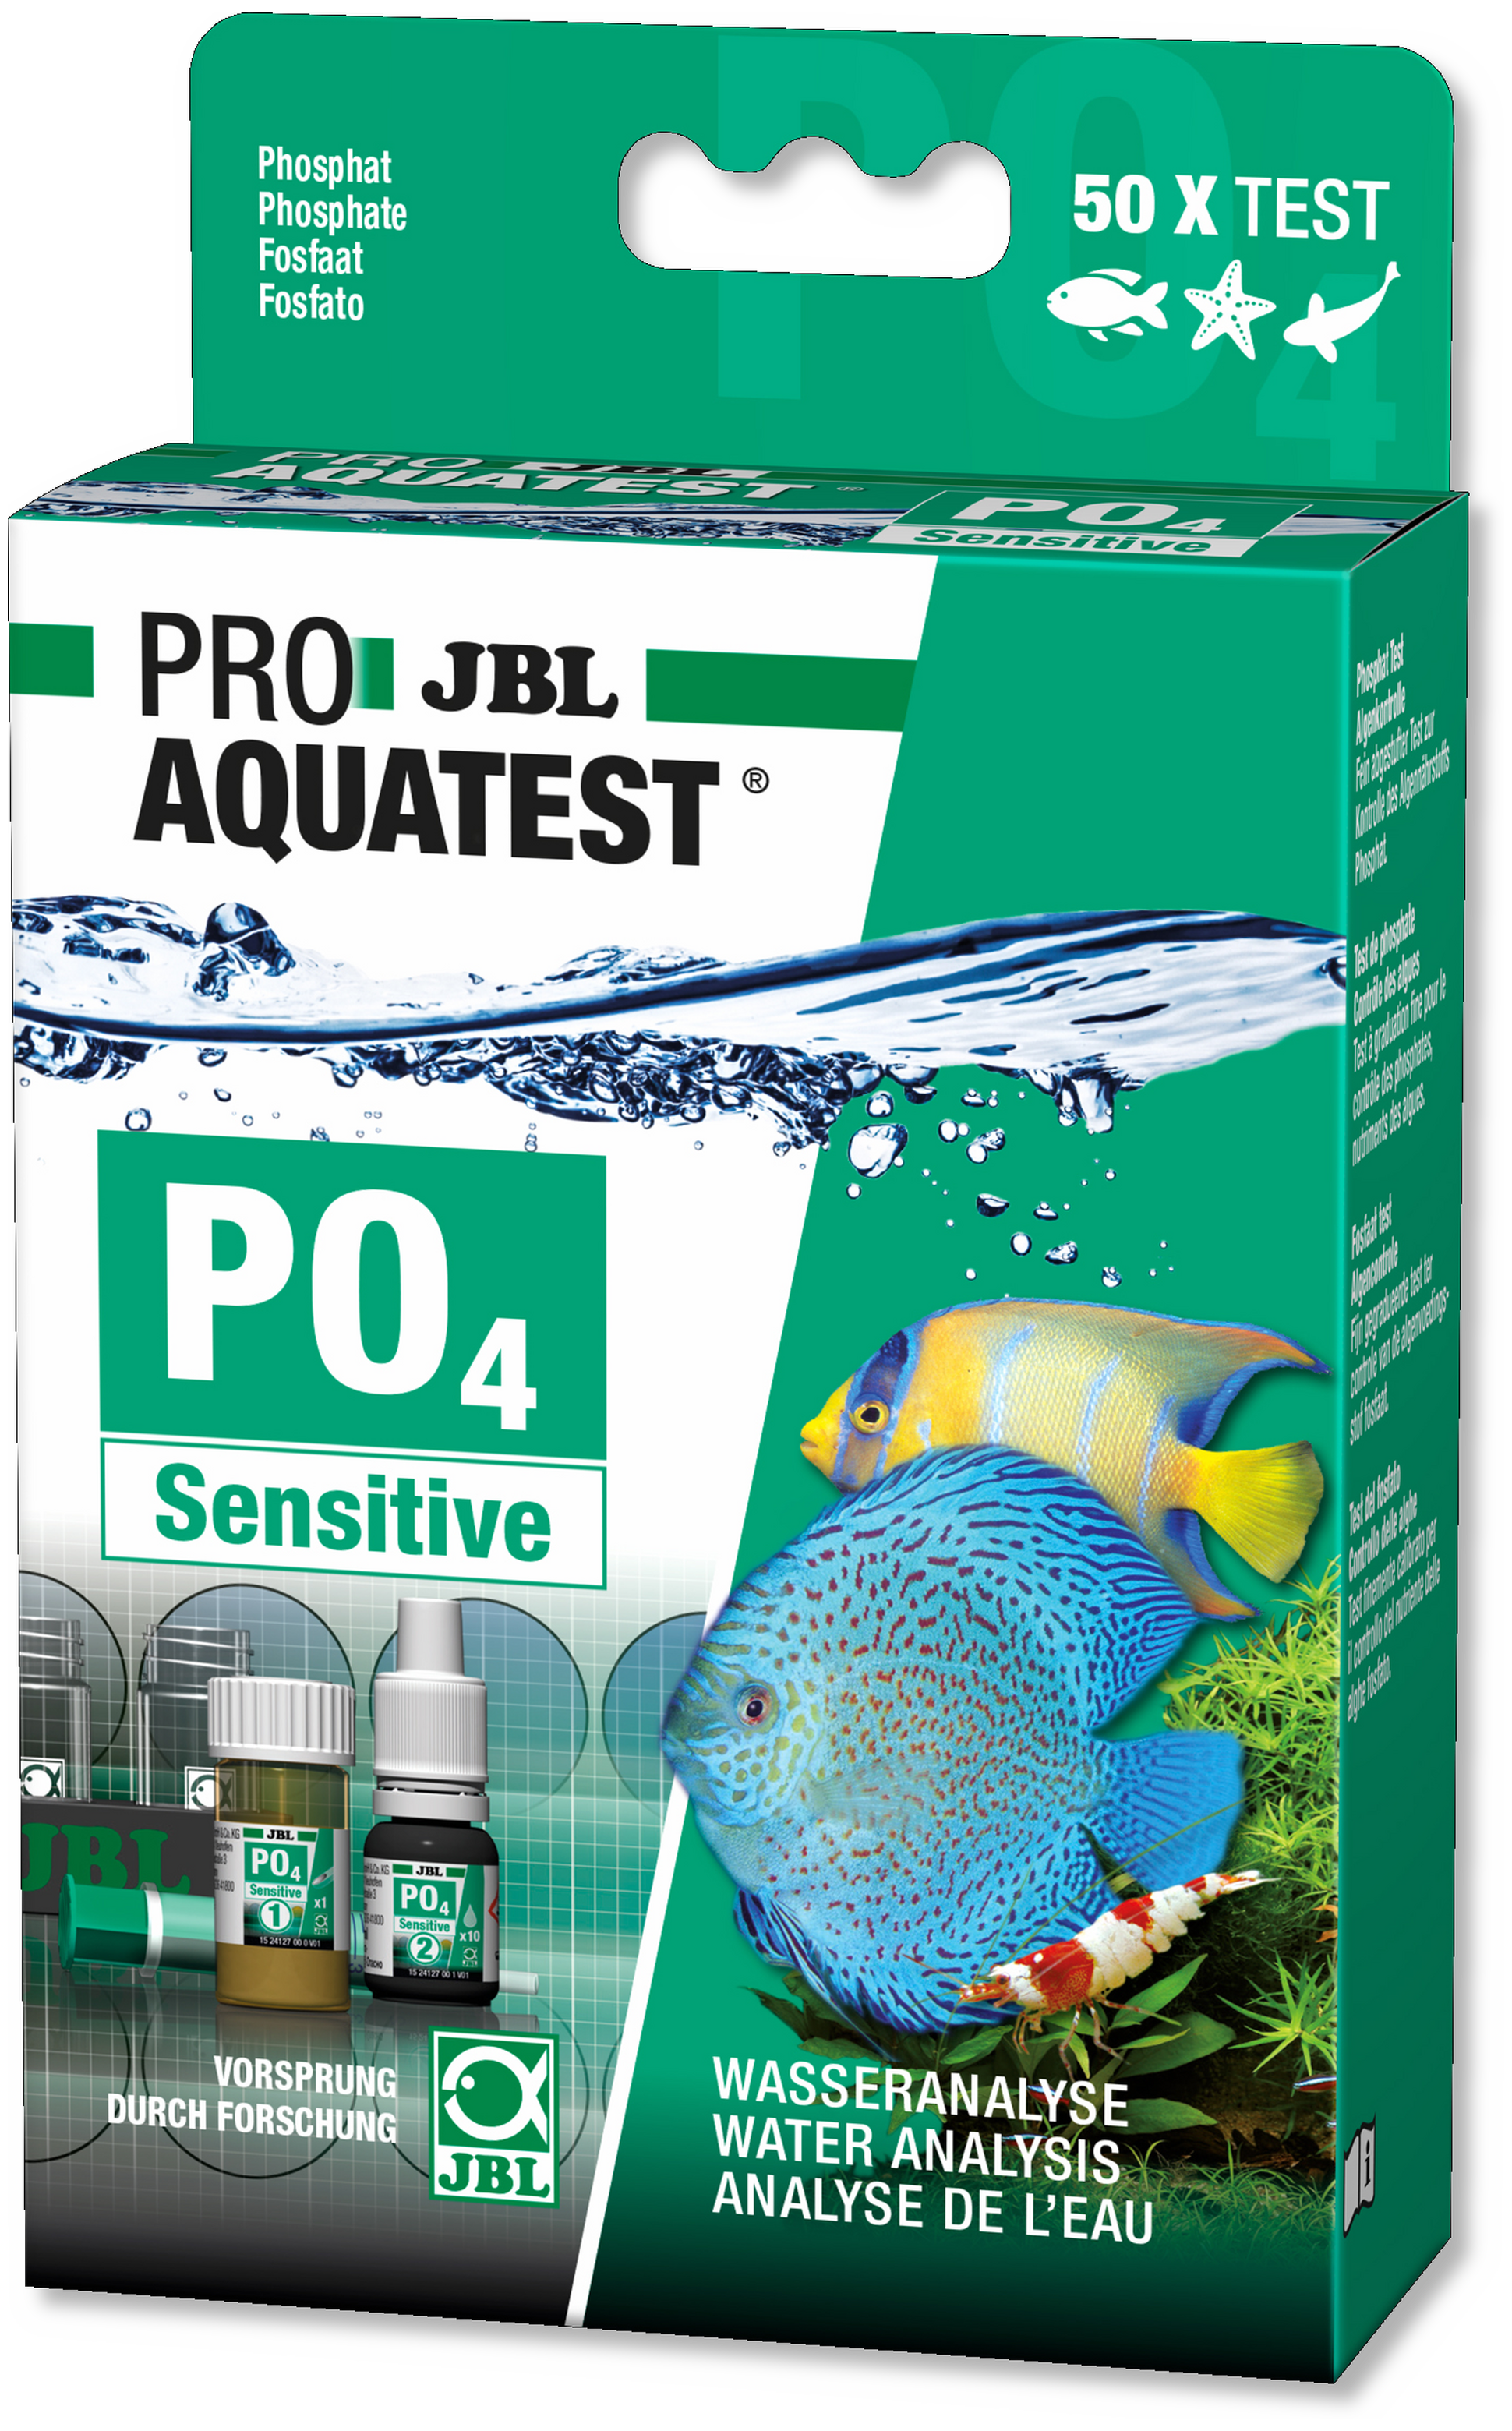 JBL PROAQUATEST PO4 Phosphat Sensitive